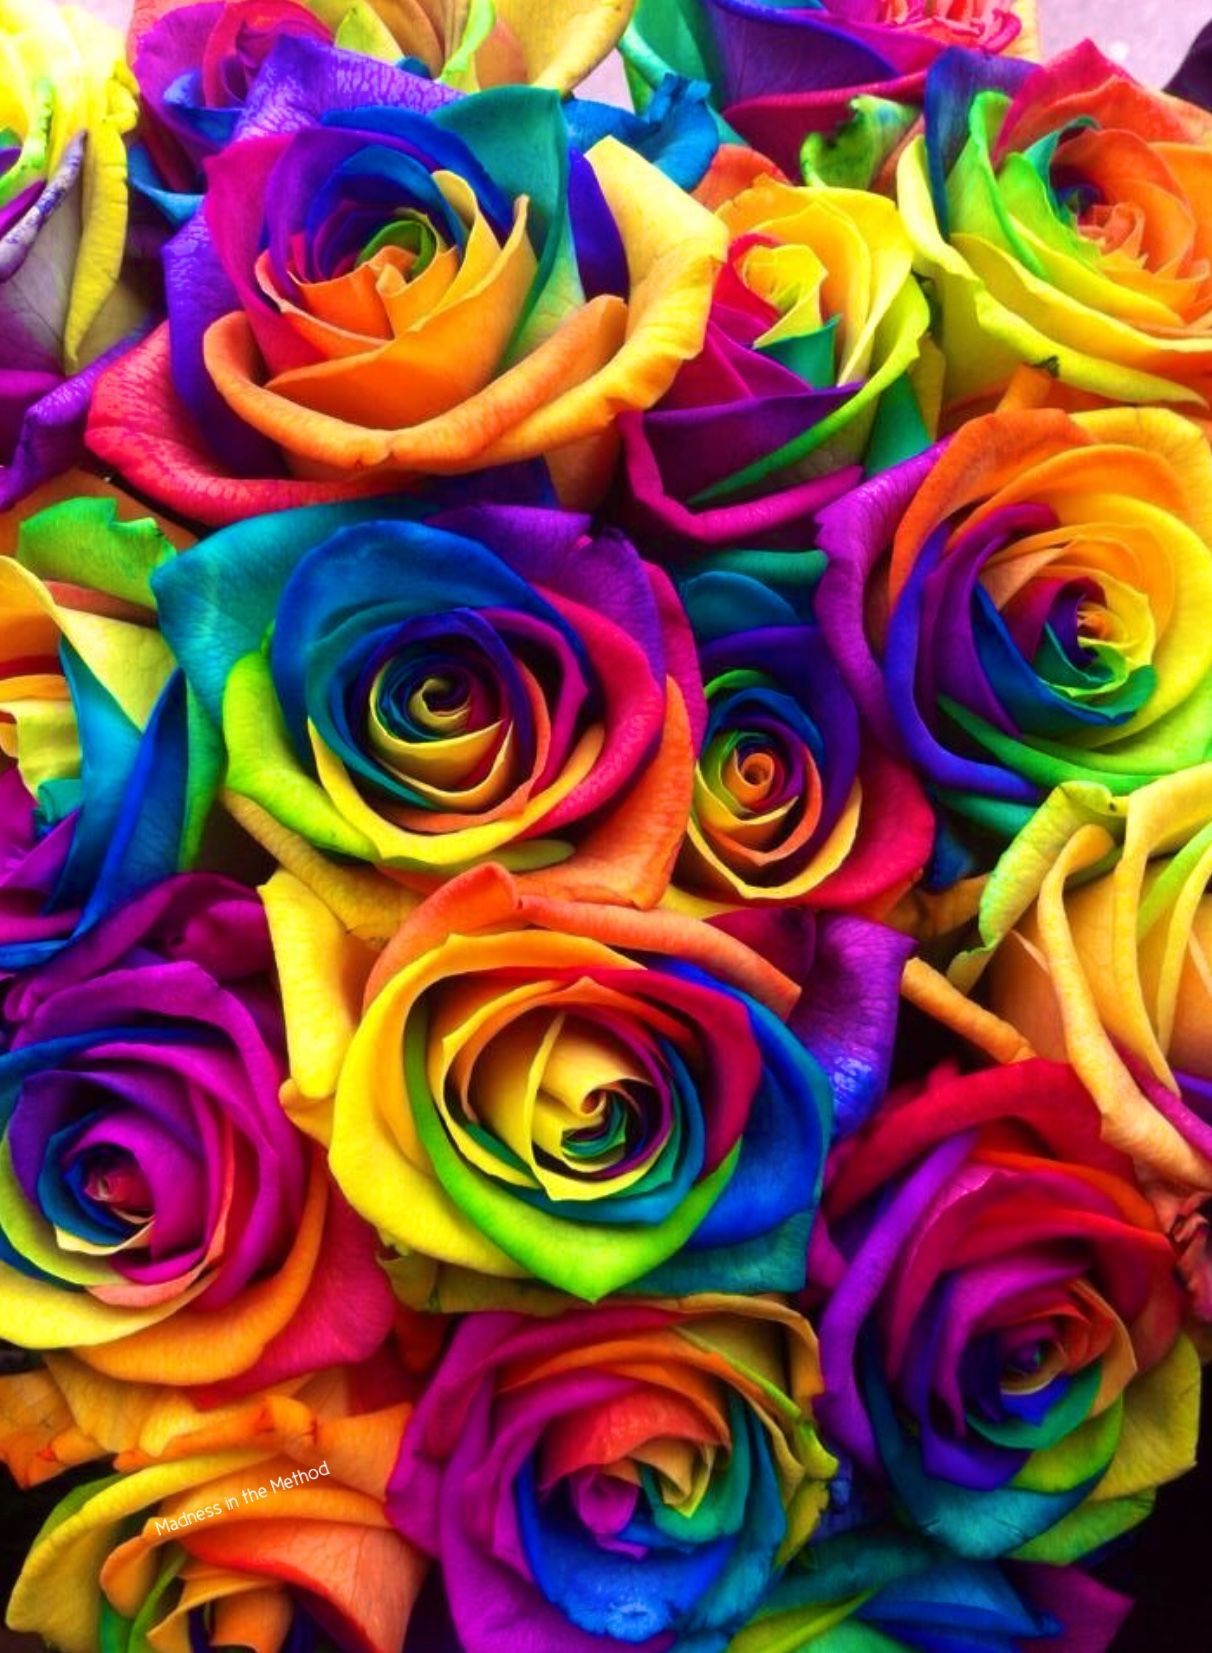 ✧Rainbow✧. Rainbow wallpaper iphone, Rainbow flowers, Rainbow roses